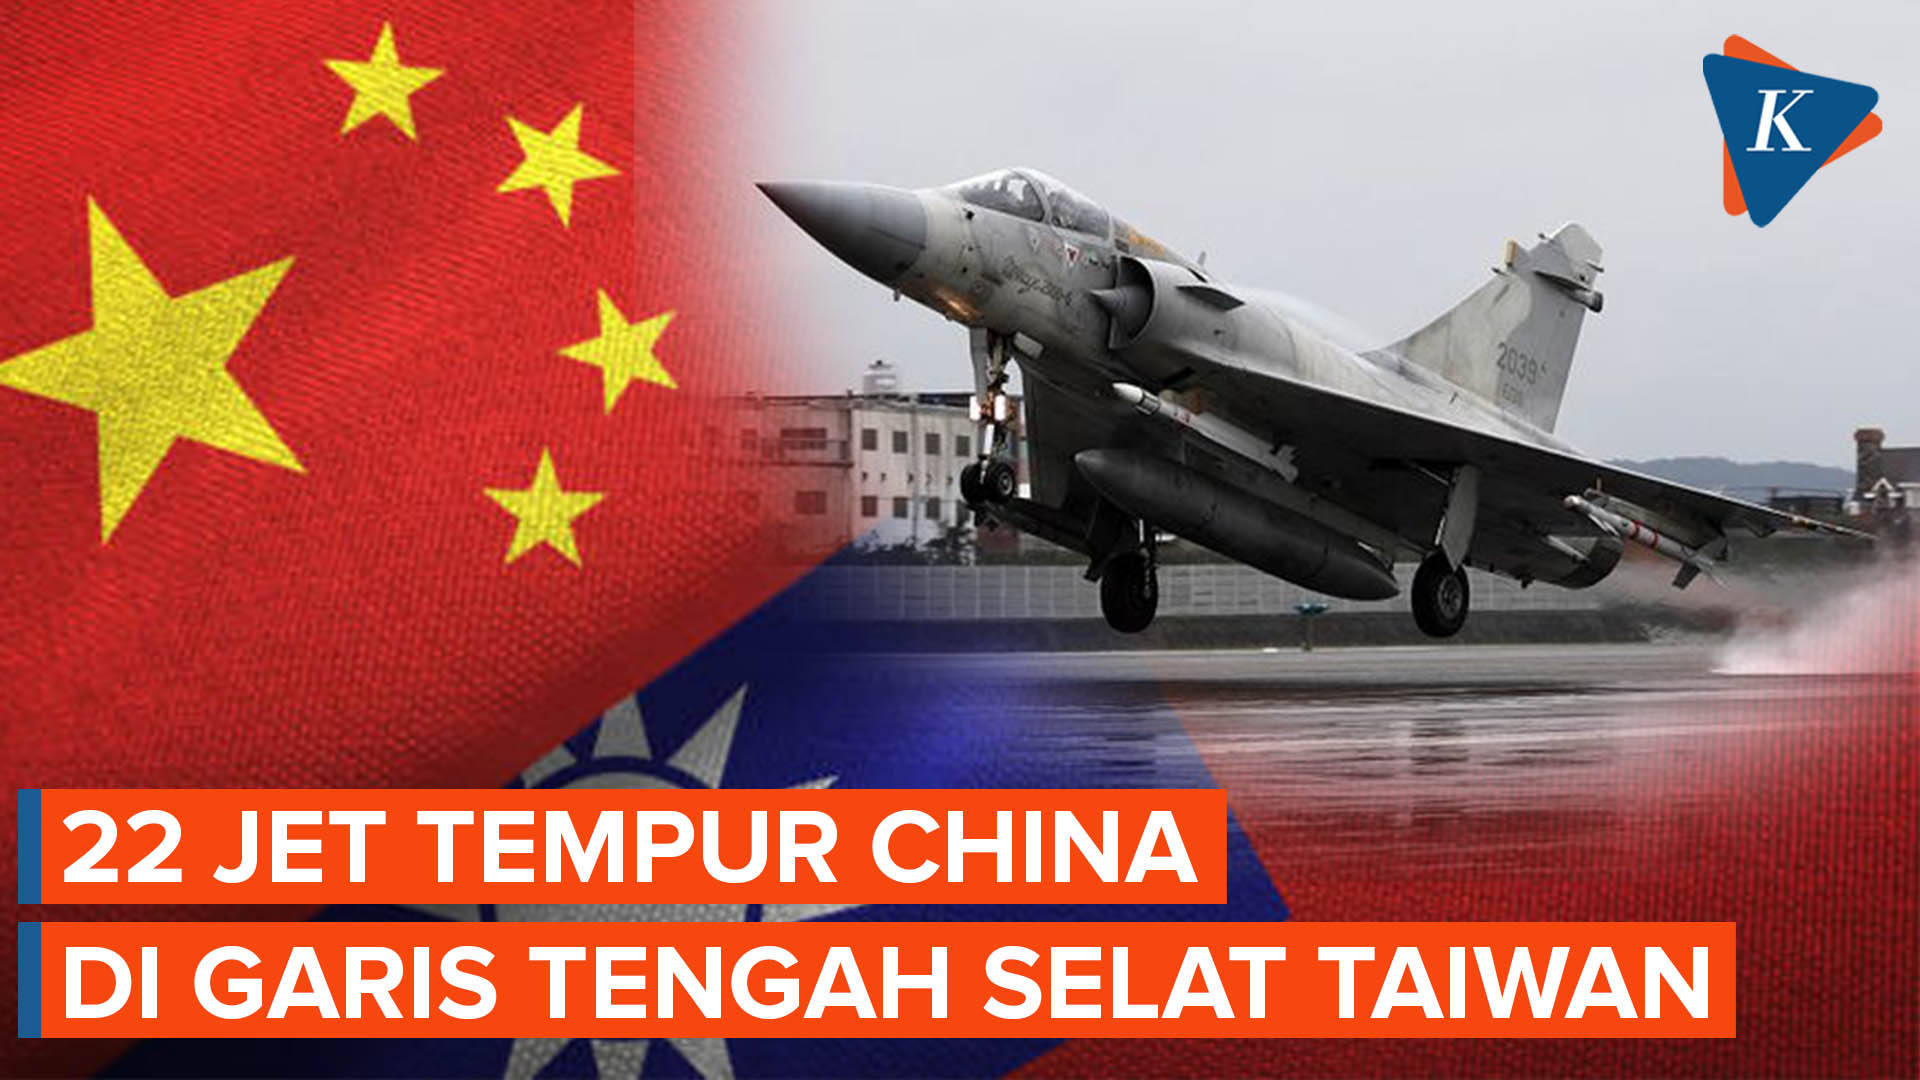 22 Jet Tempur China Dilaporkan Melewati Garis Tengah Selat Taiwan